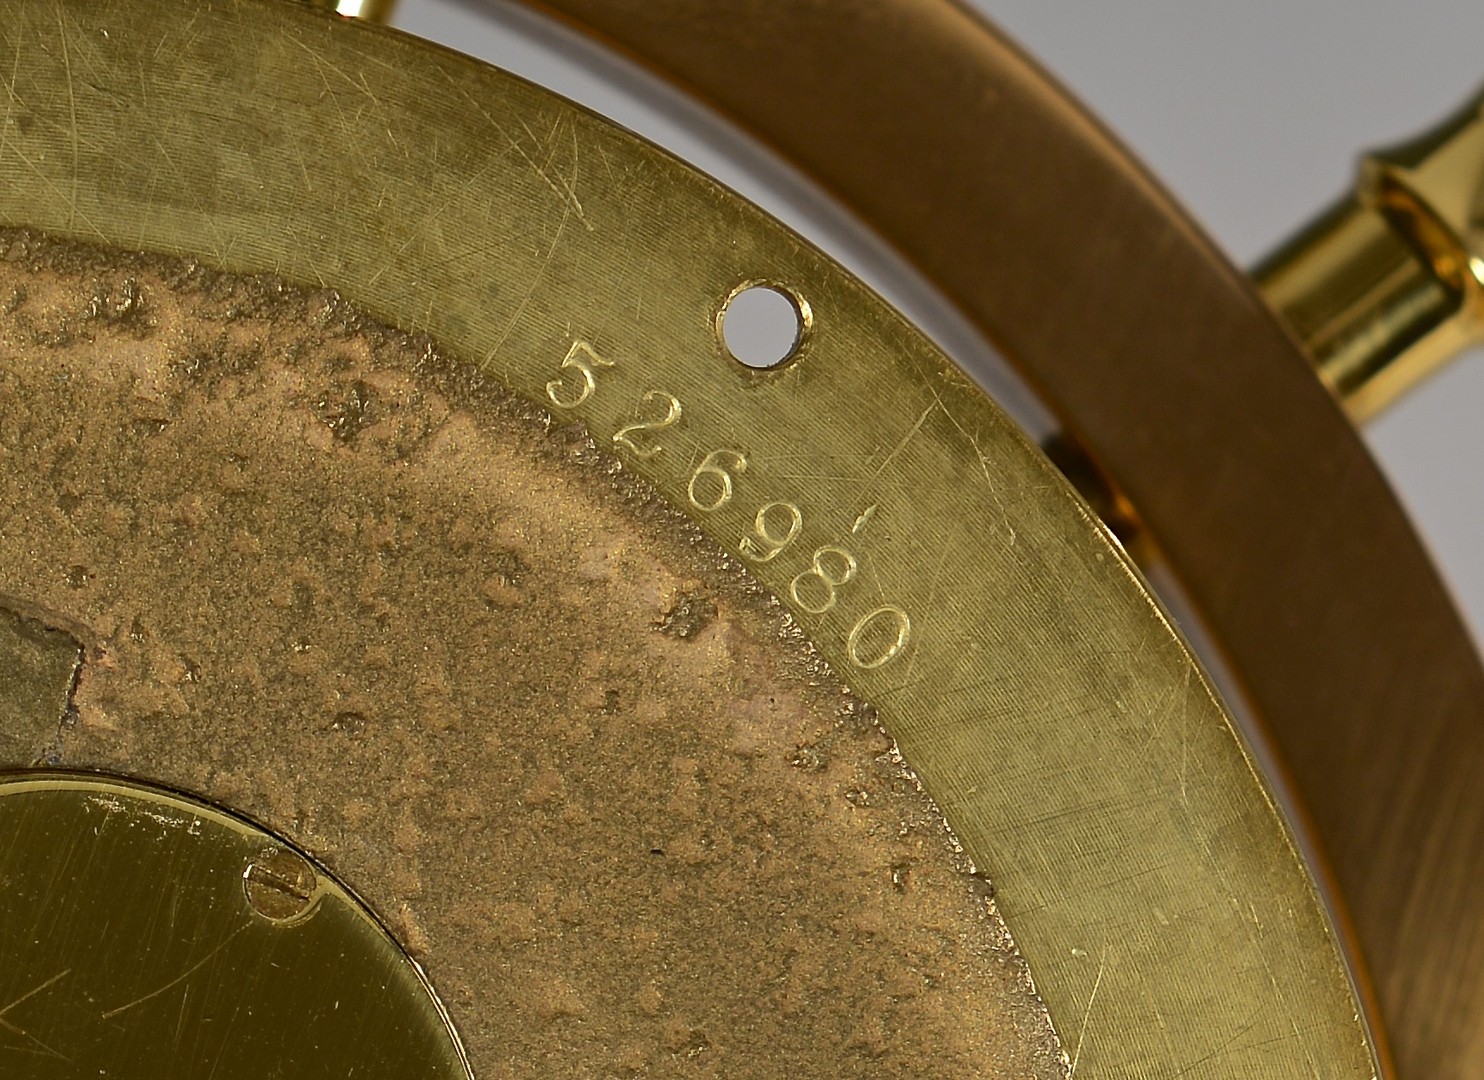 Lot 492: Brass Marine Chelsea Ship’s Bell Clock